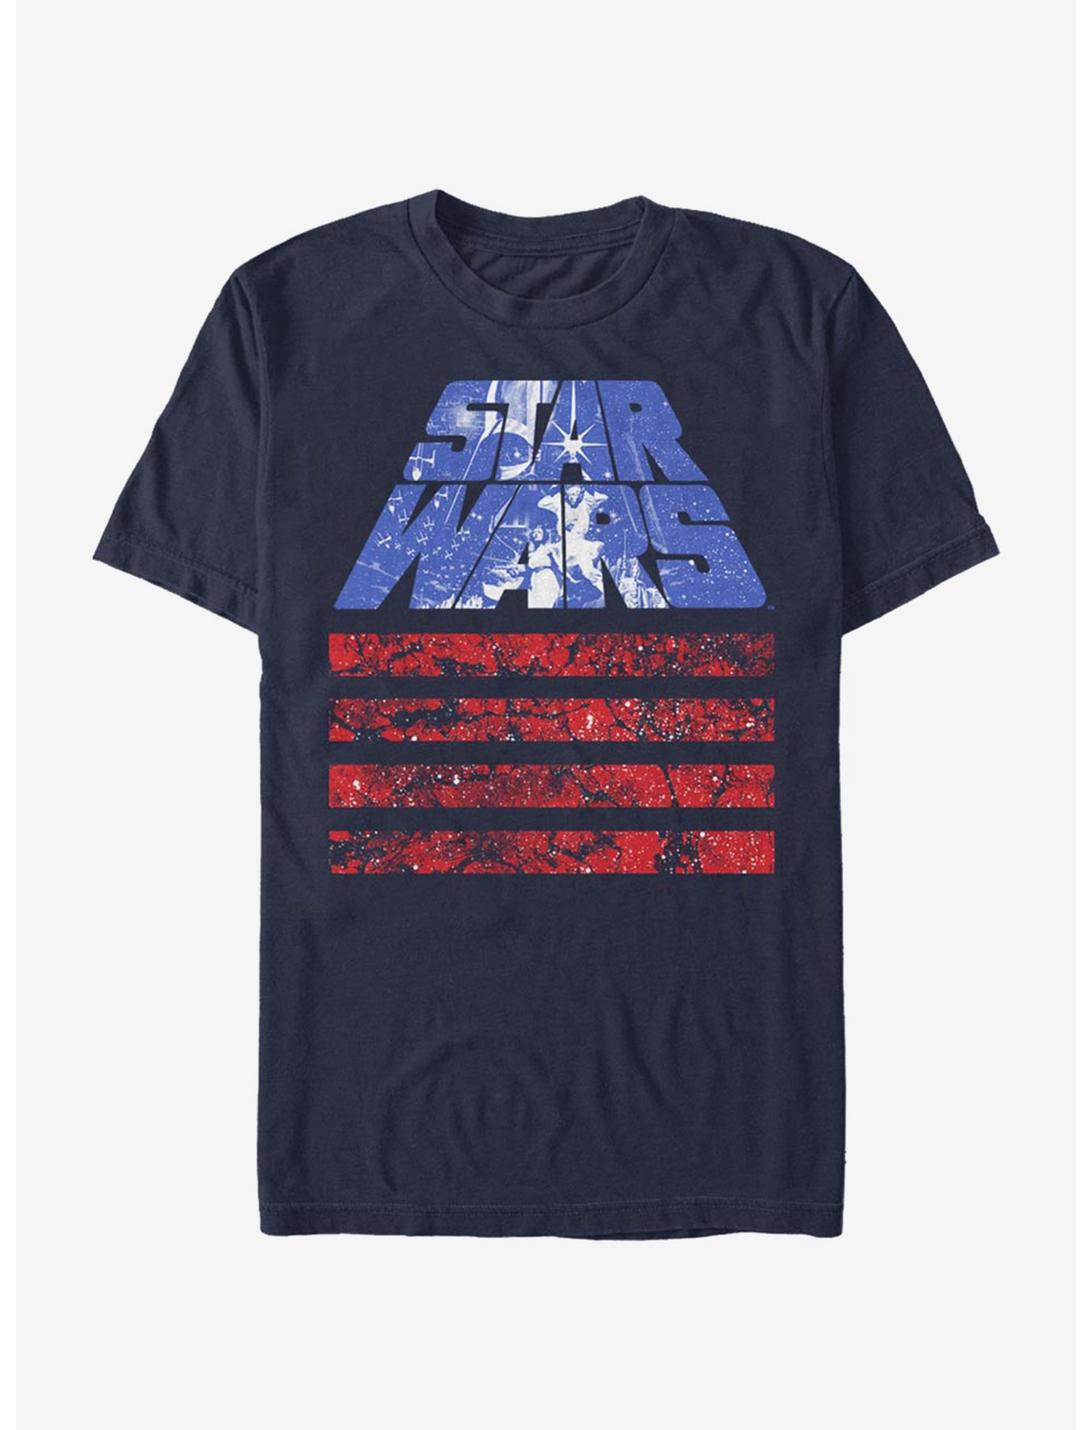 Star Wars Star Glory T-Shirt, NAVY, hi-res